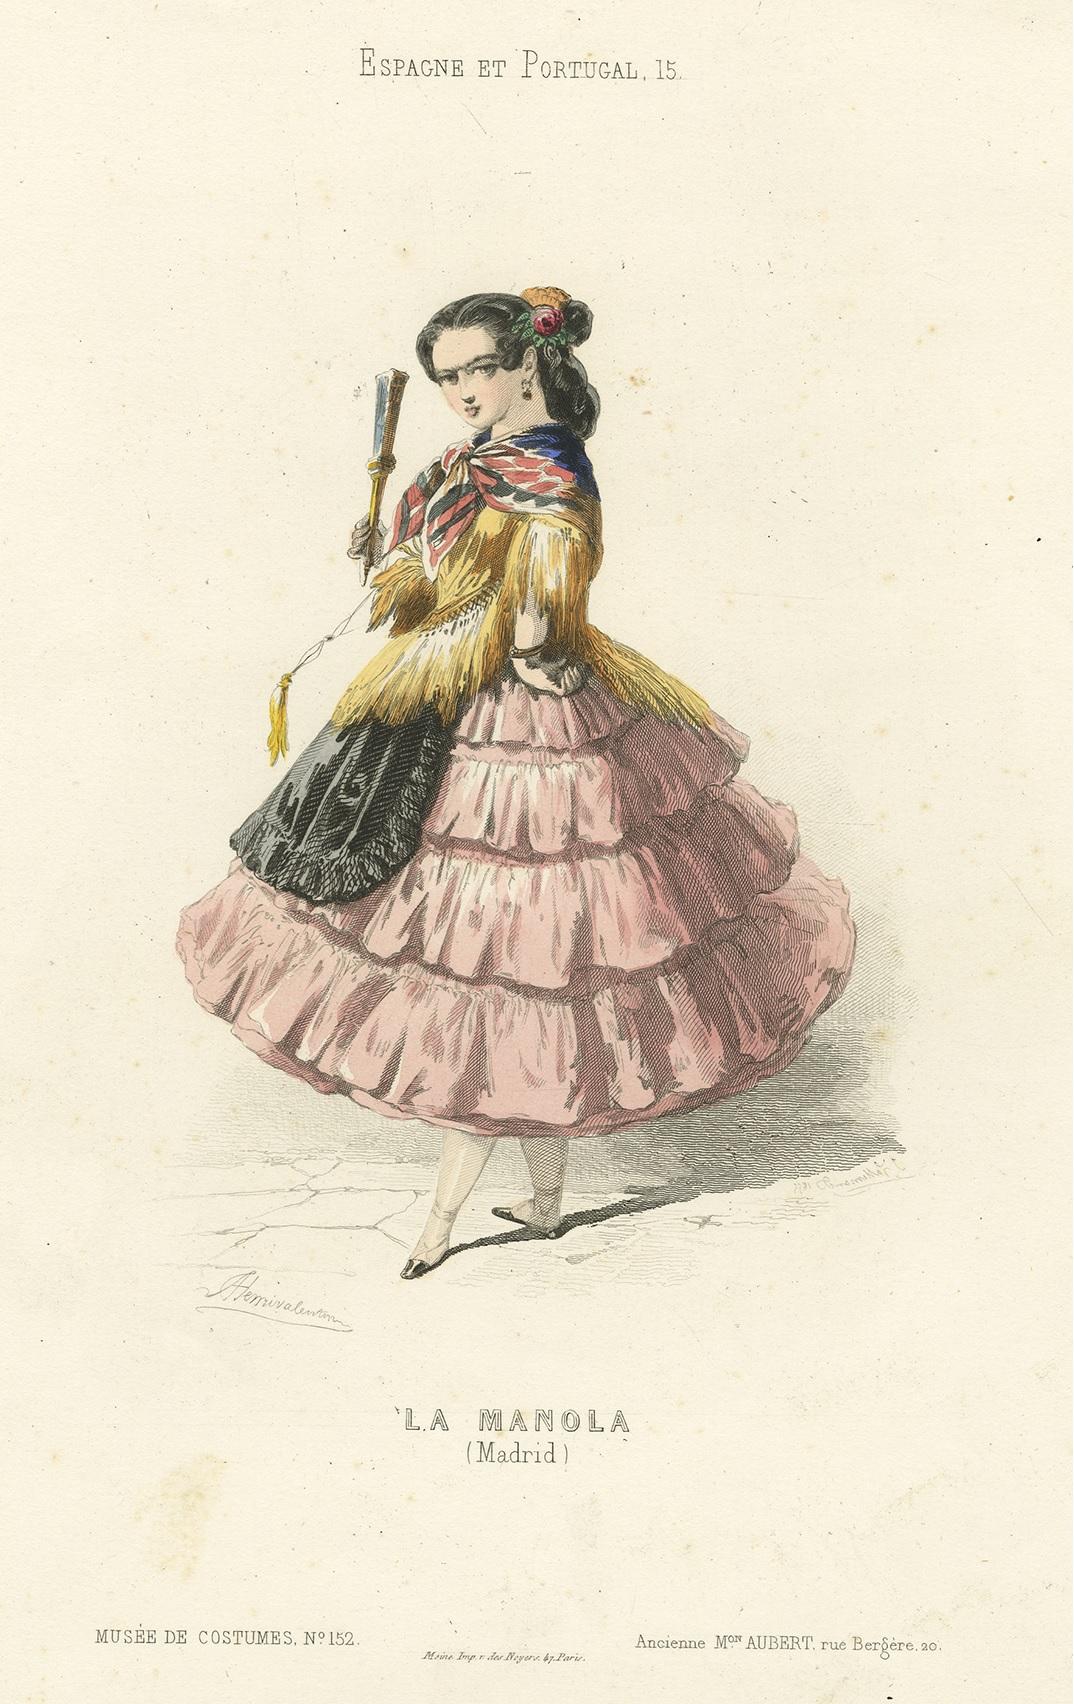 Antique costume print titled 'Femme des Environs de Vitoria'. Old print depicting a 'Manola' from Spain. This print originates from 'Costumes Moderne (Musée de Costumes). Published in Paris: Ancienne Maison Aubert.